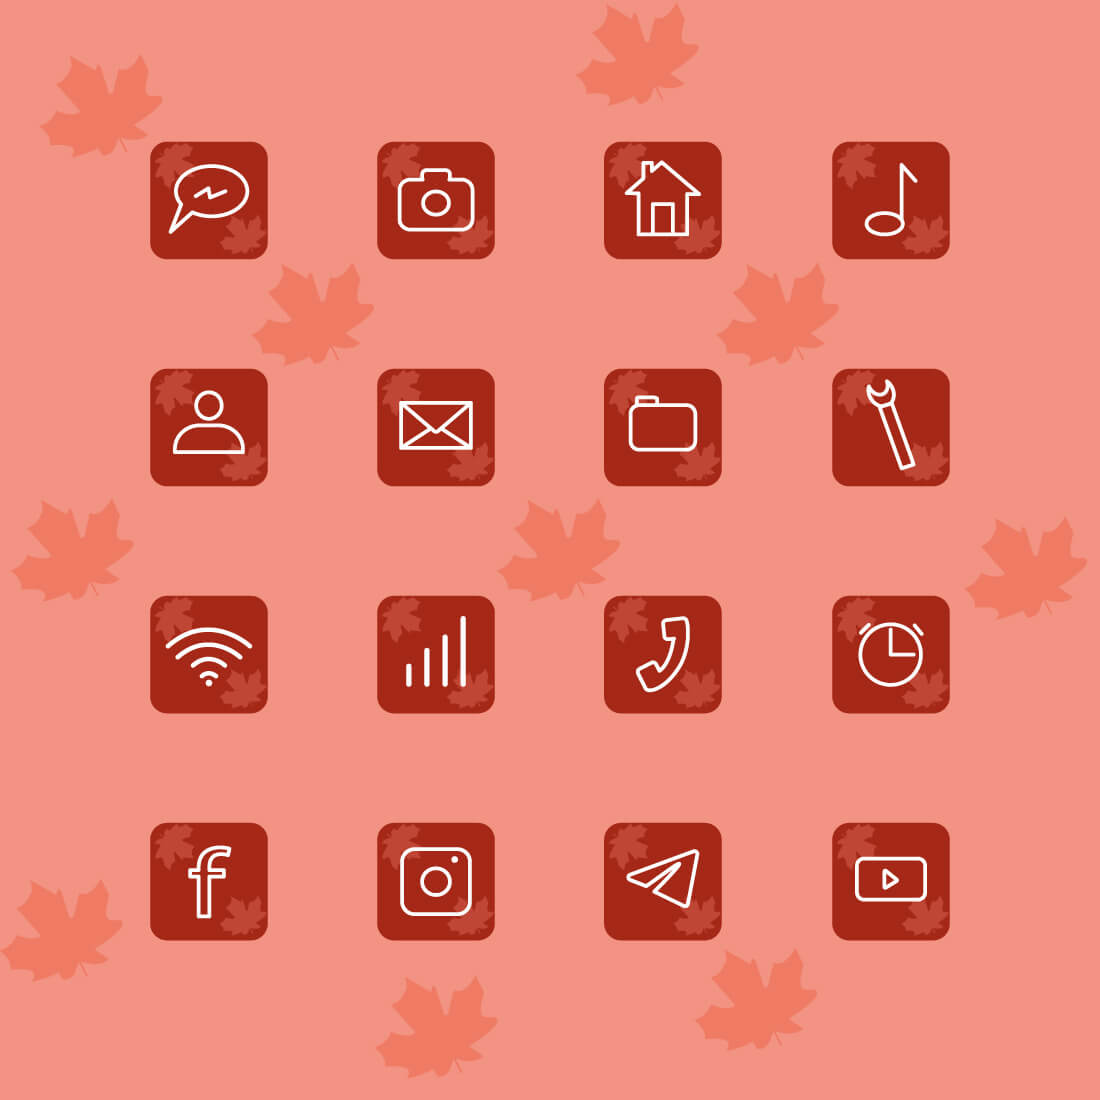 Free Fall App Icons previews.